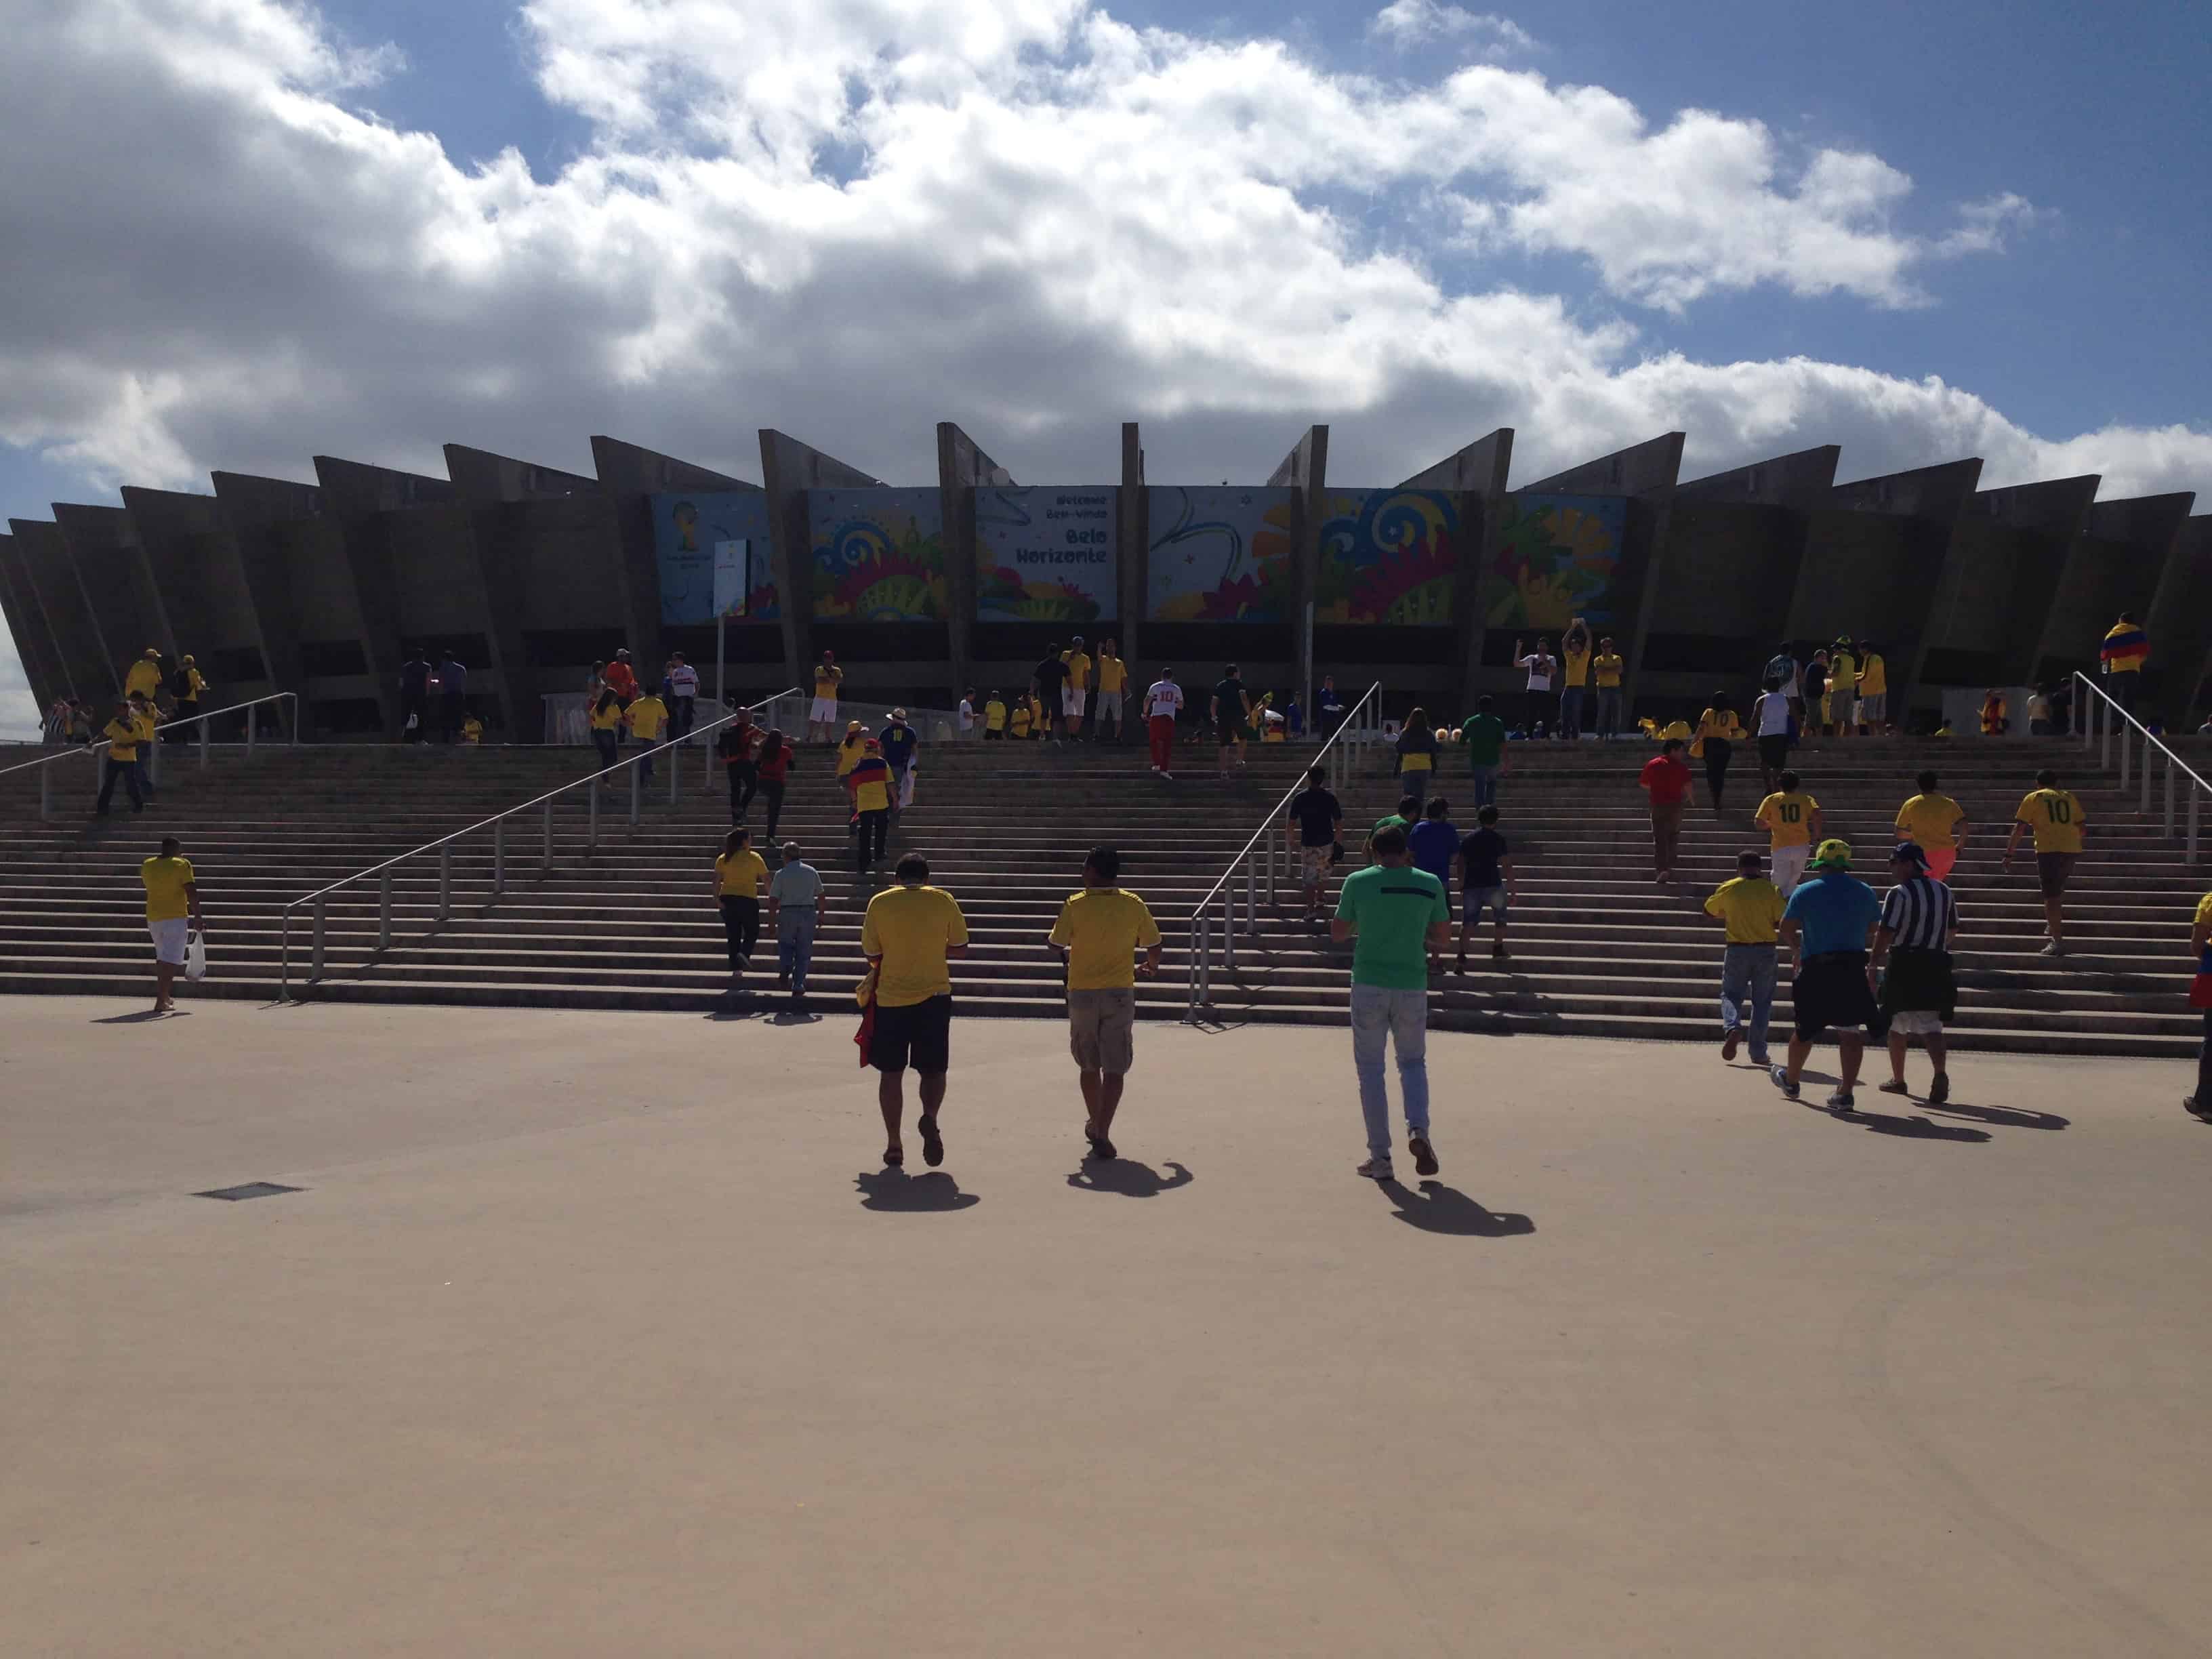 2014 World Cup at Estádio Mineirão in Belo Horizonte, Brazil